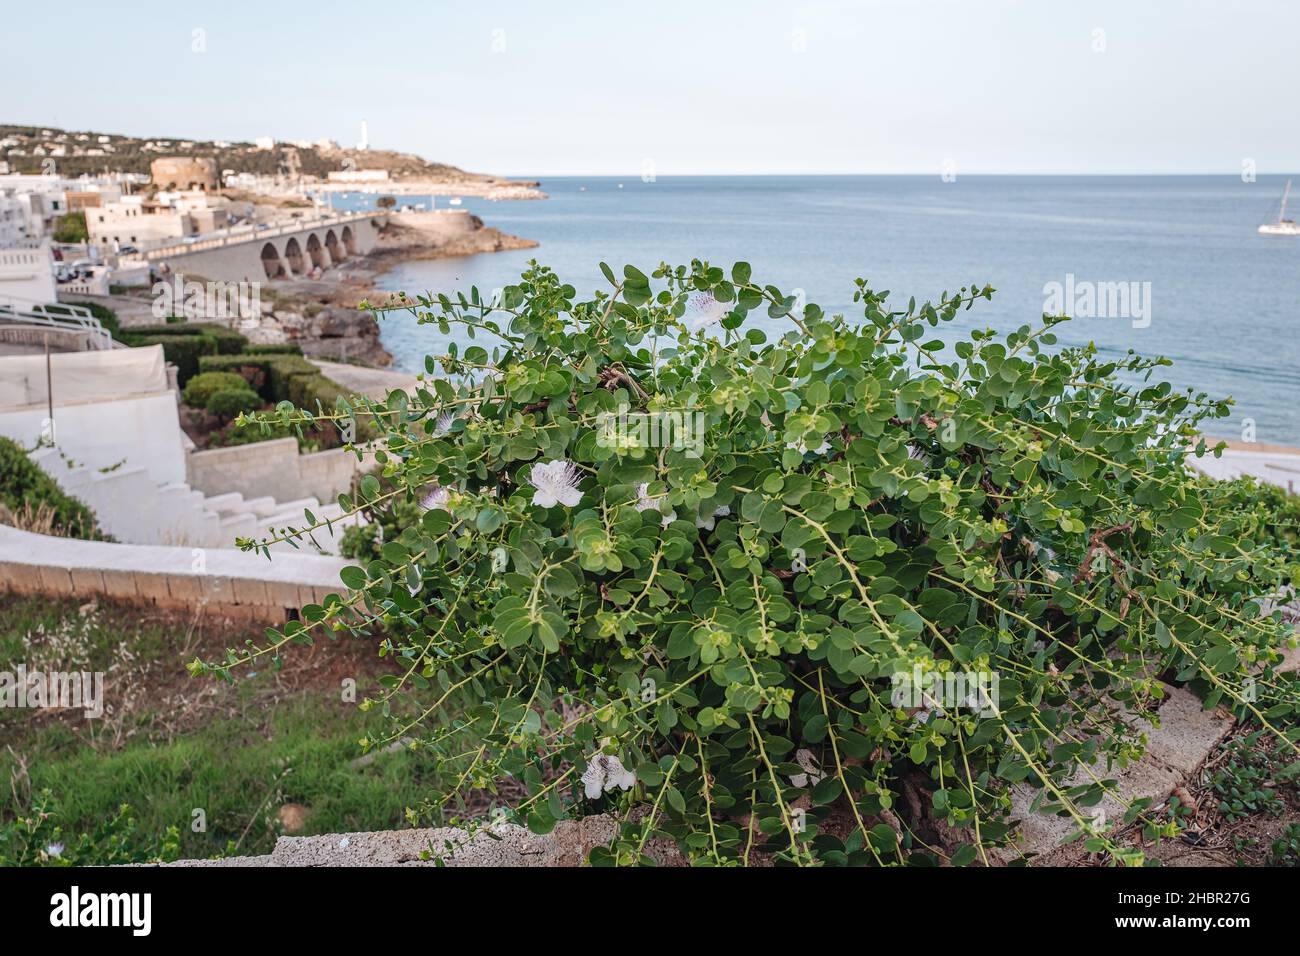 Wild capers plantin Santa Maria di leuca, the southern point of Puglia, Italy Stock Photo